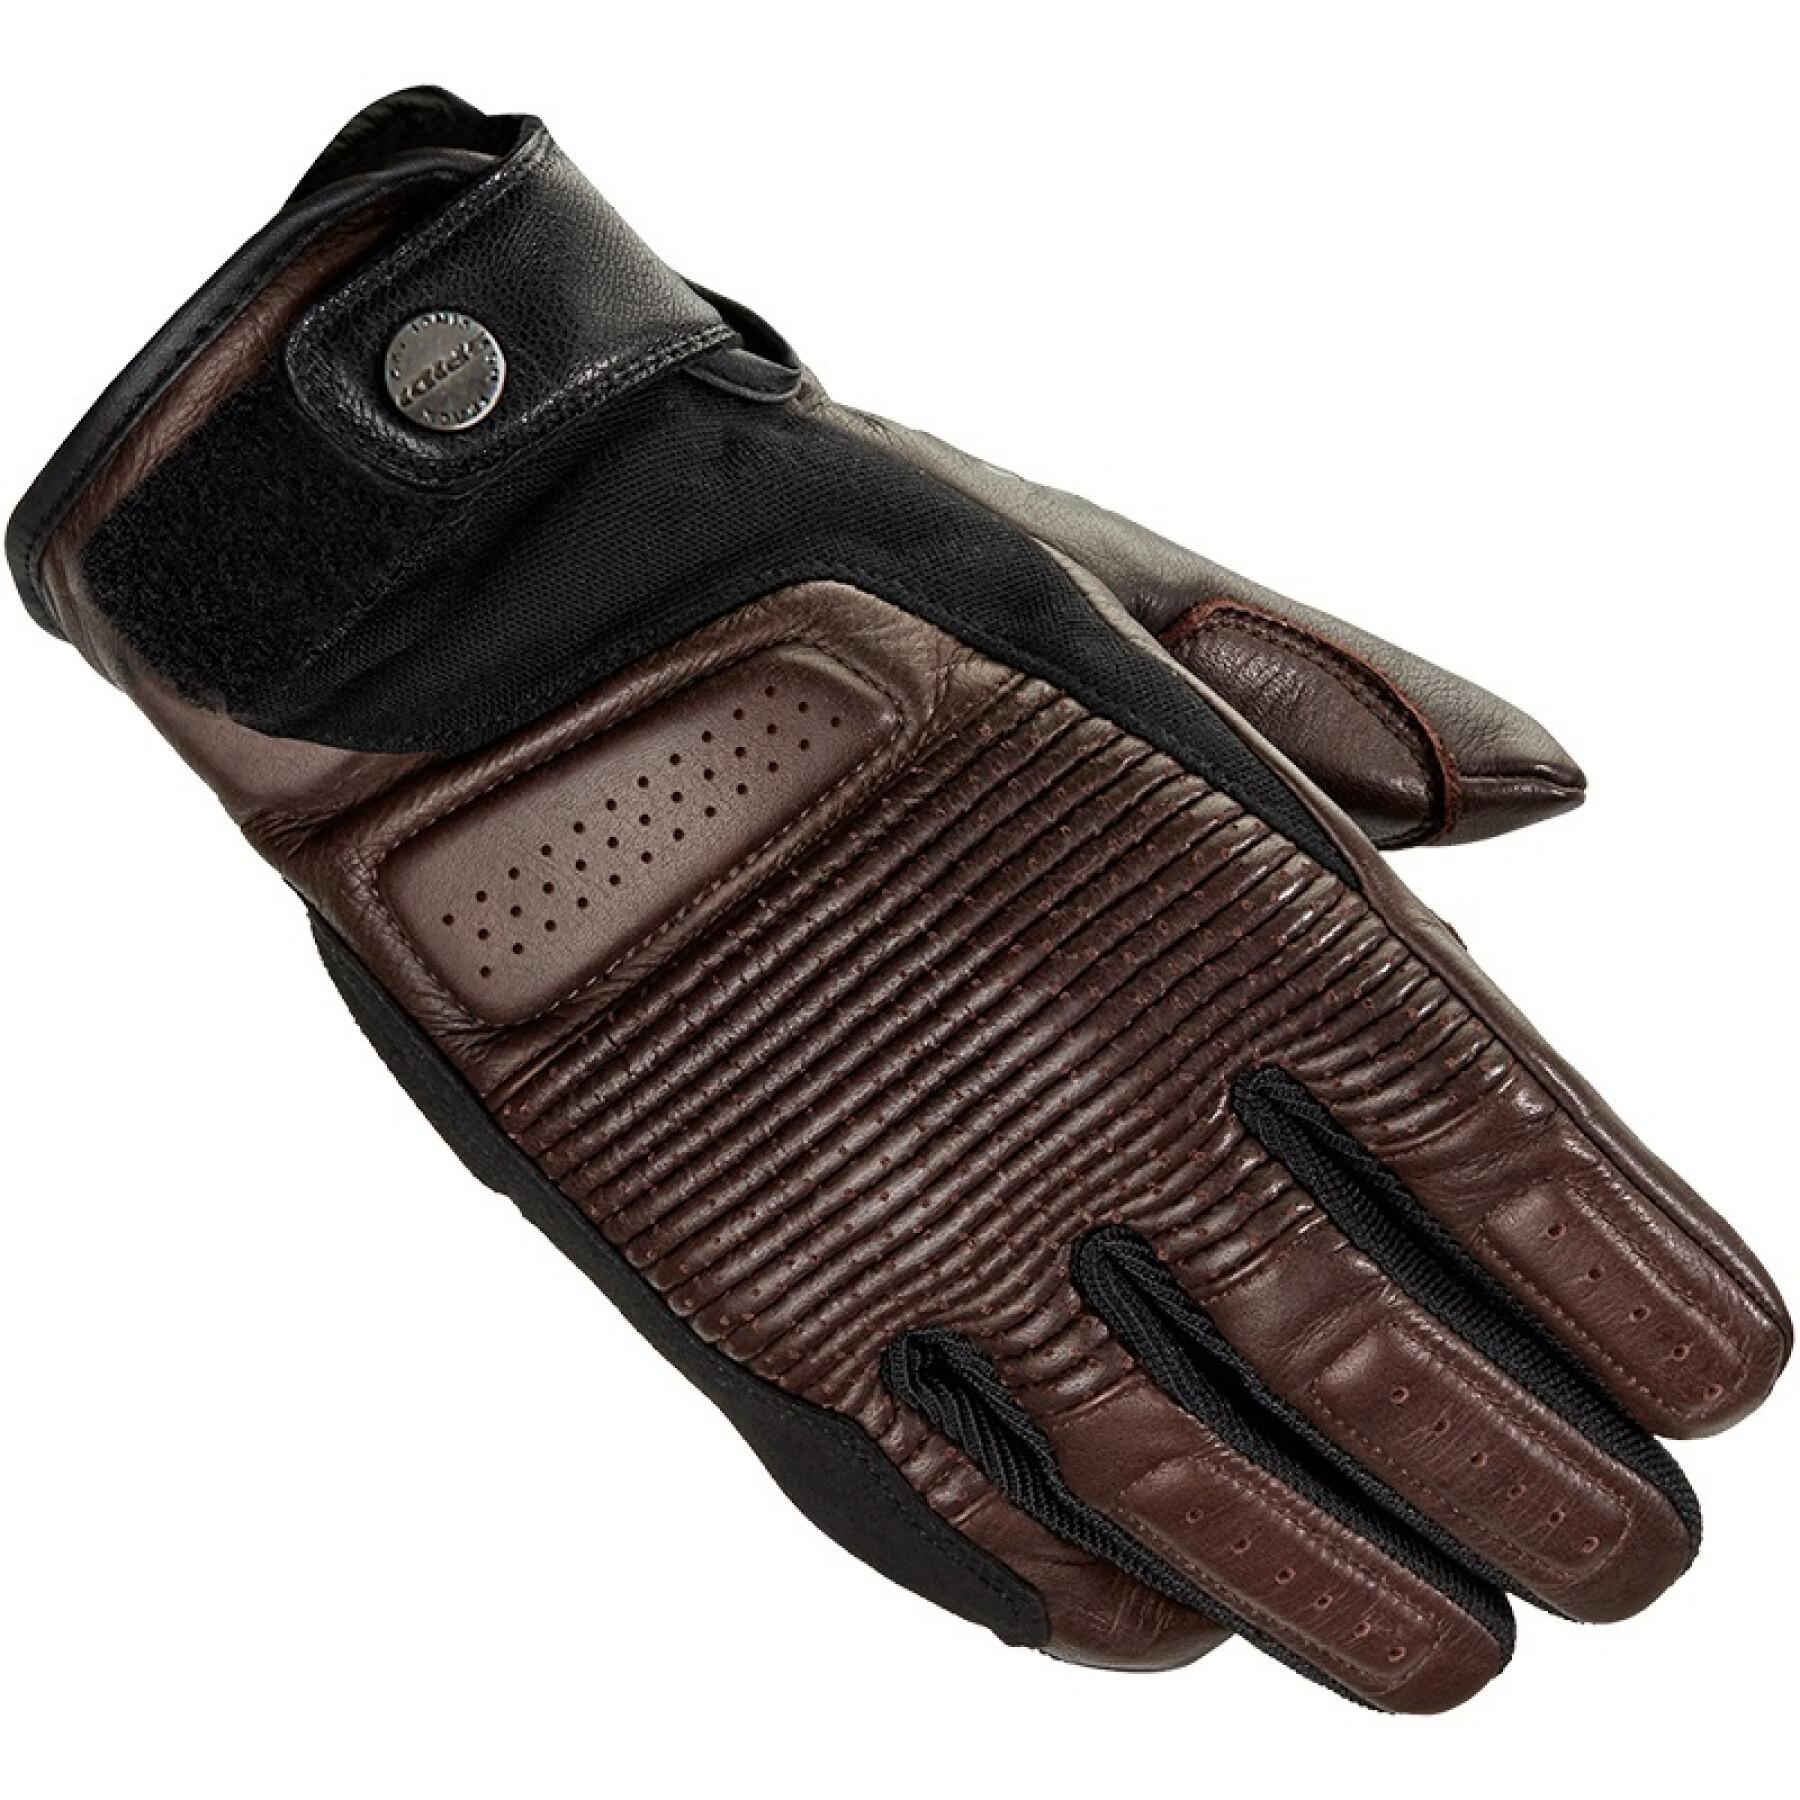 All season motorcycle gloves Spidi clubber